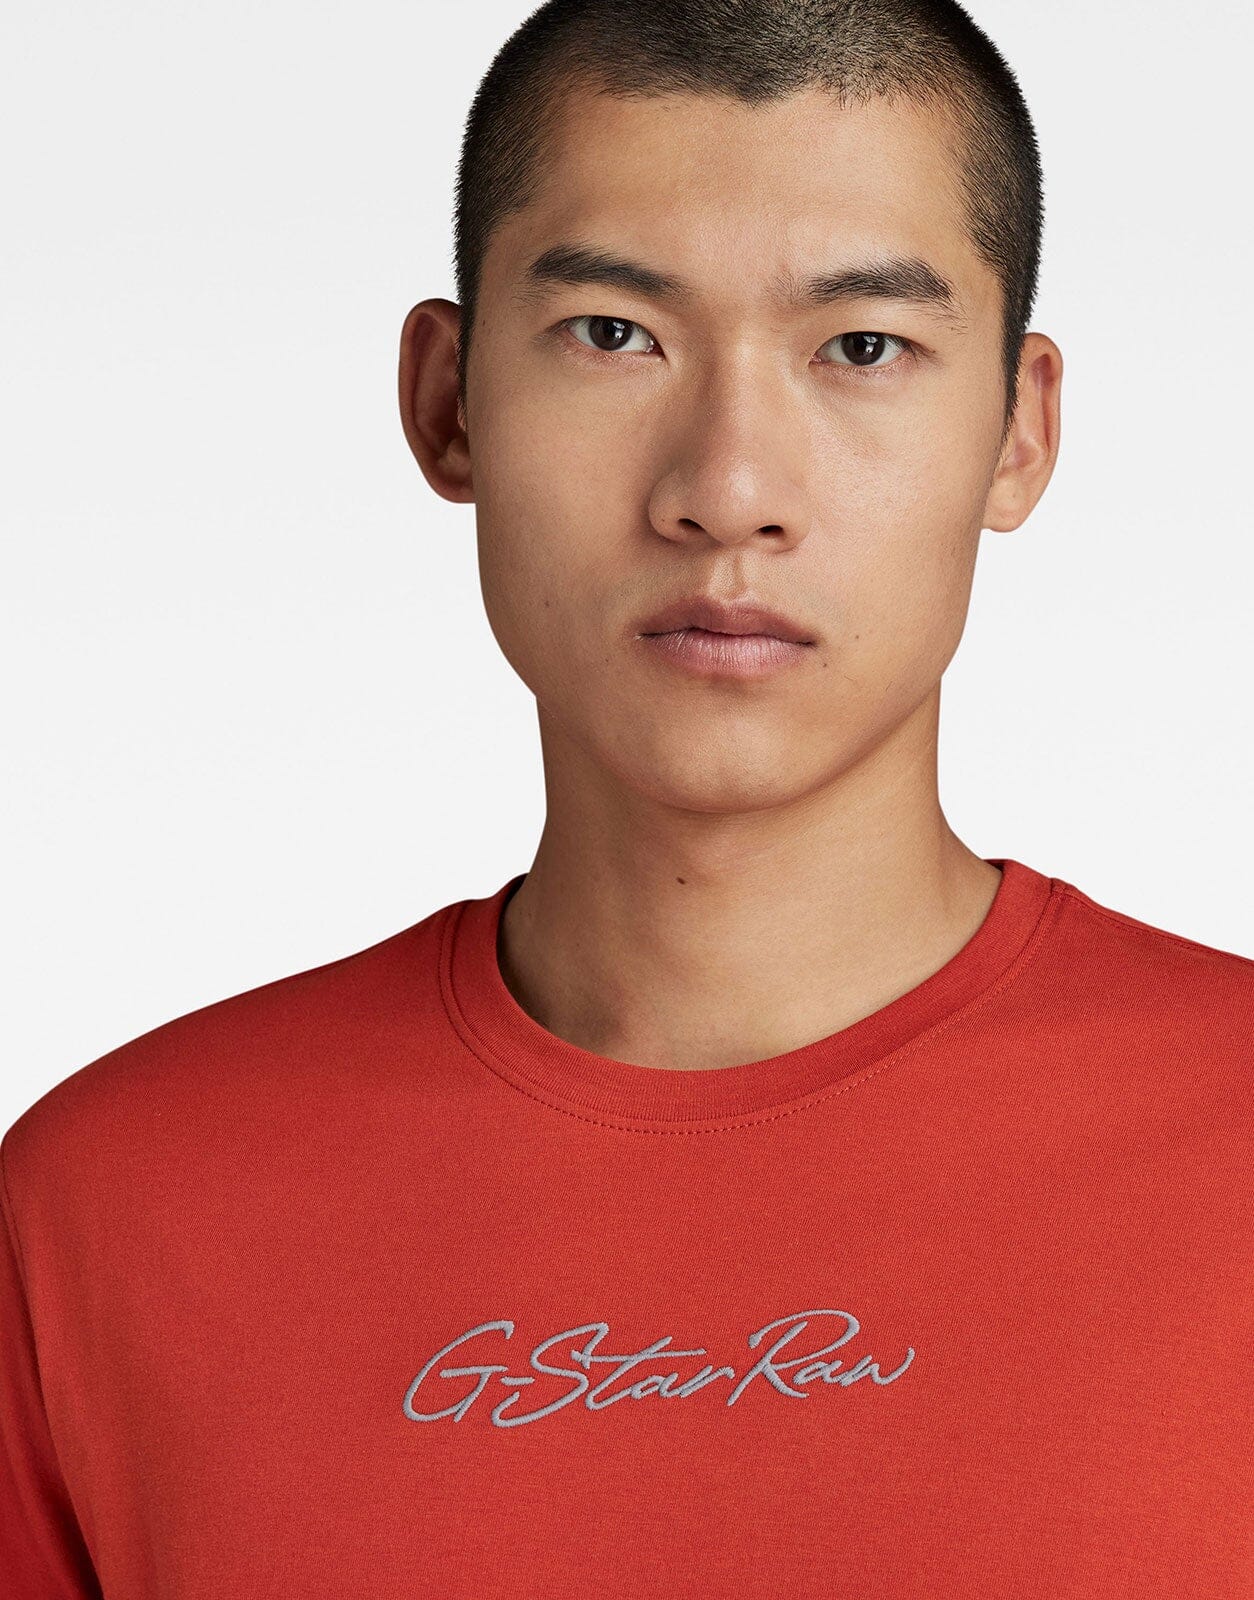 G-Star RAW Autograph T-Shirt - Subwear